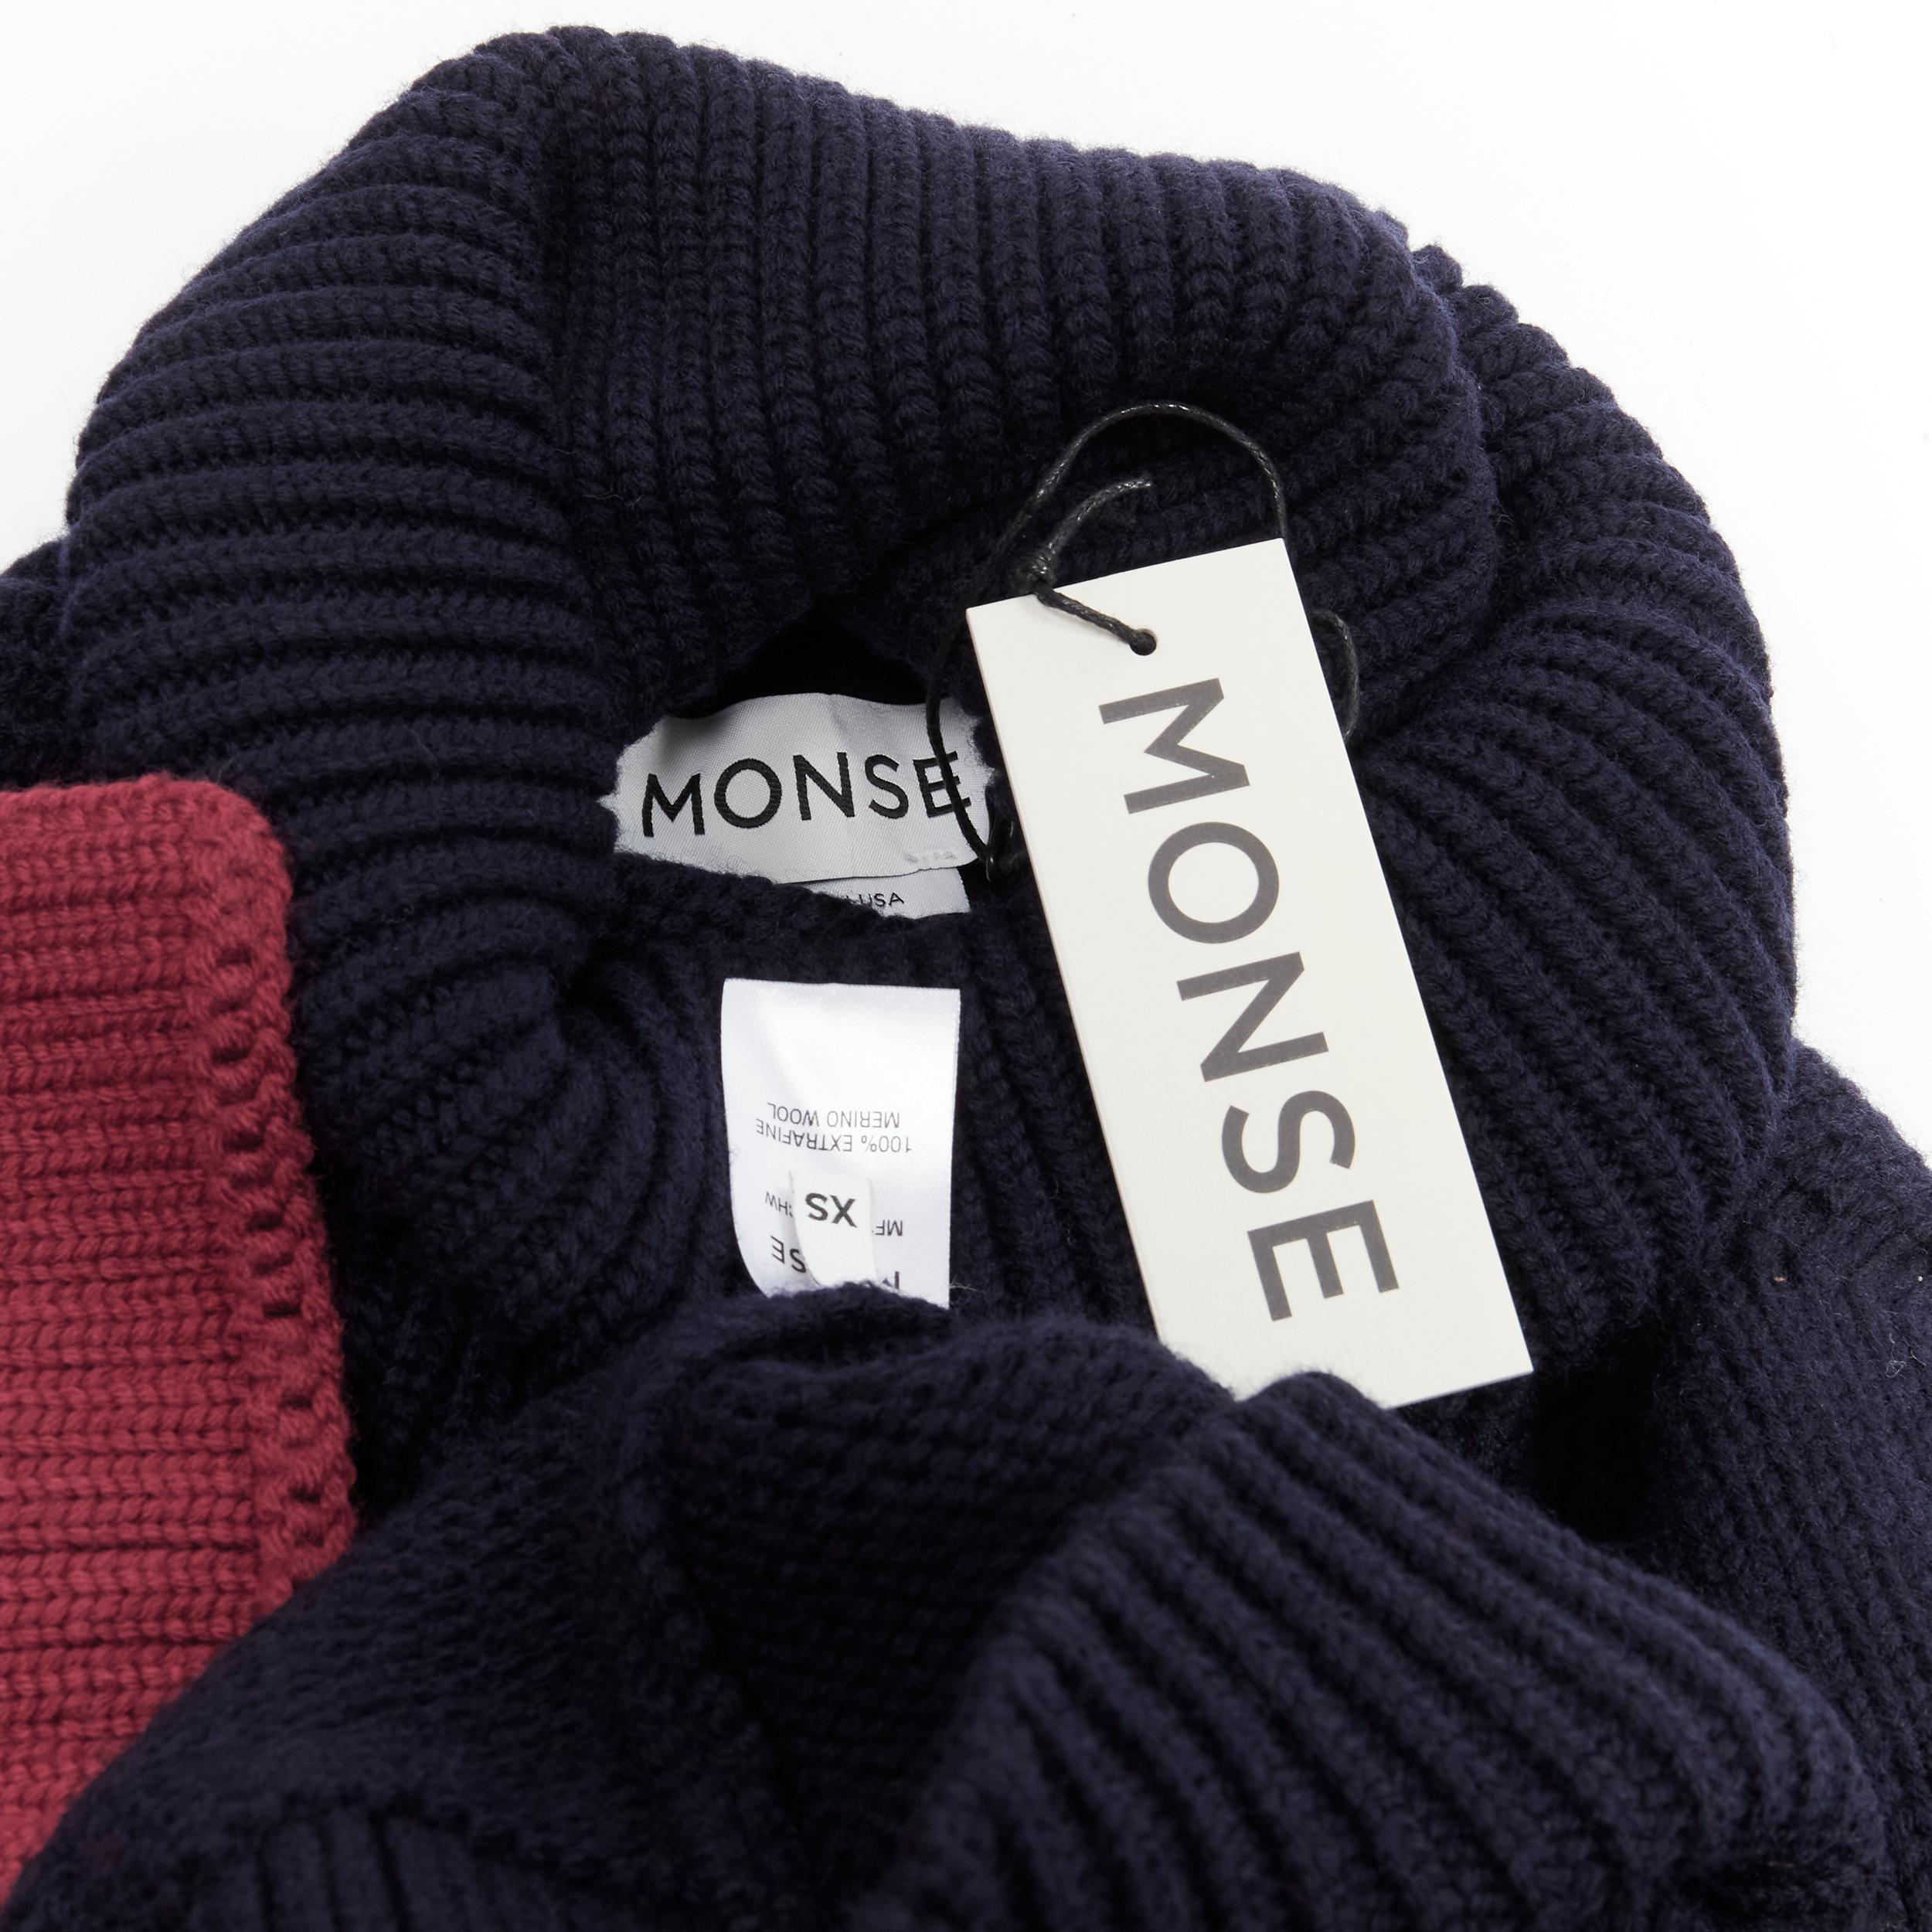 new MONSE 100% extra fine merino wool navy burgundy bias sweater cape pocho XS 4